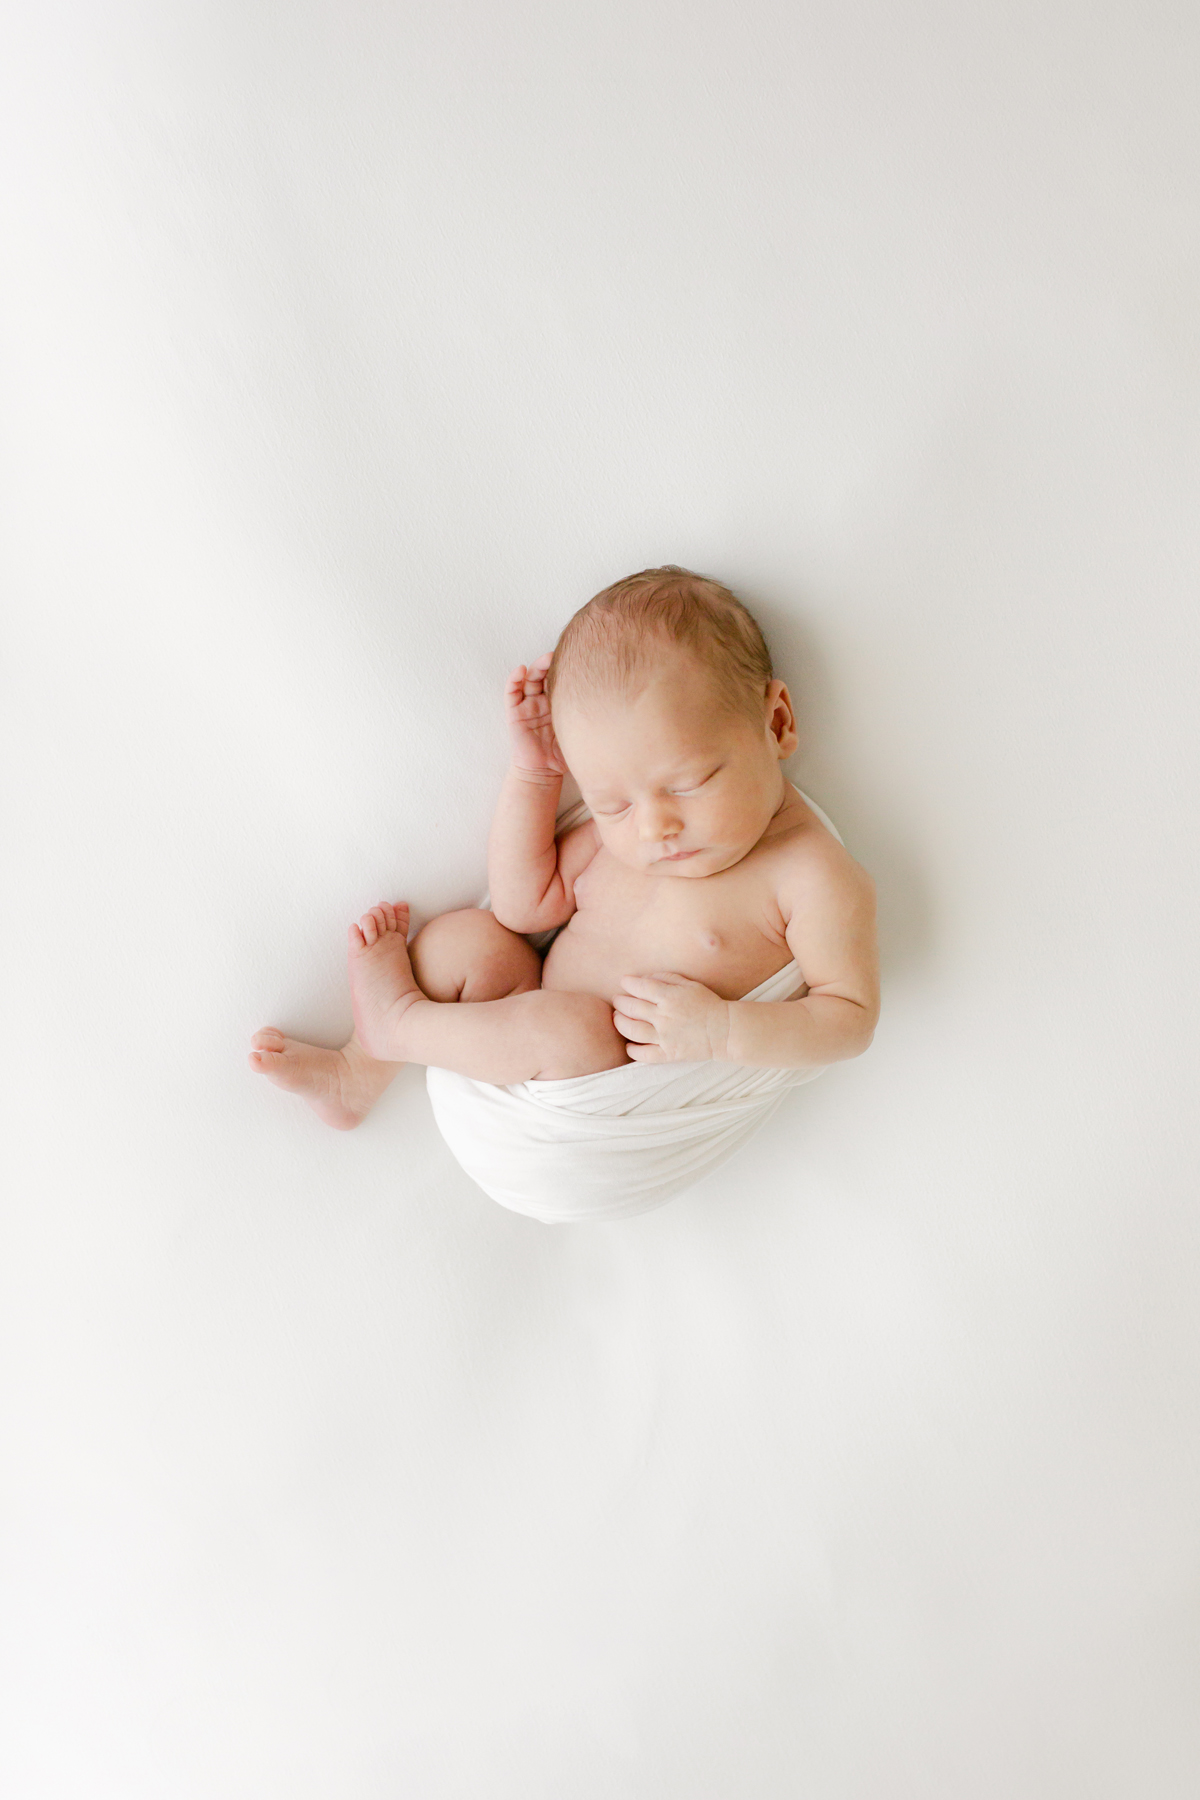 tiny baby details captured in baby led posing expert, Virginia Schultz's, Omaha nebraska photography studio